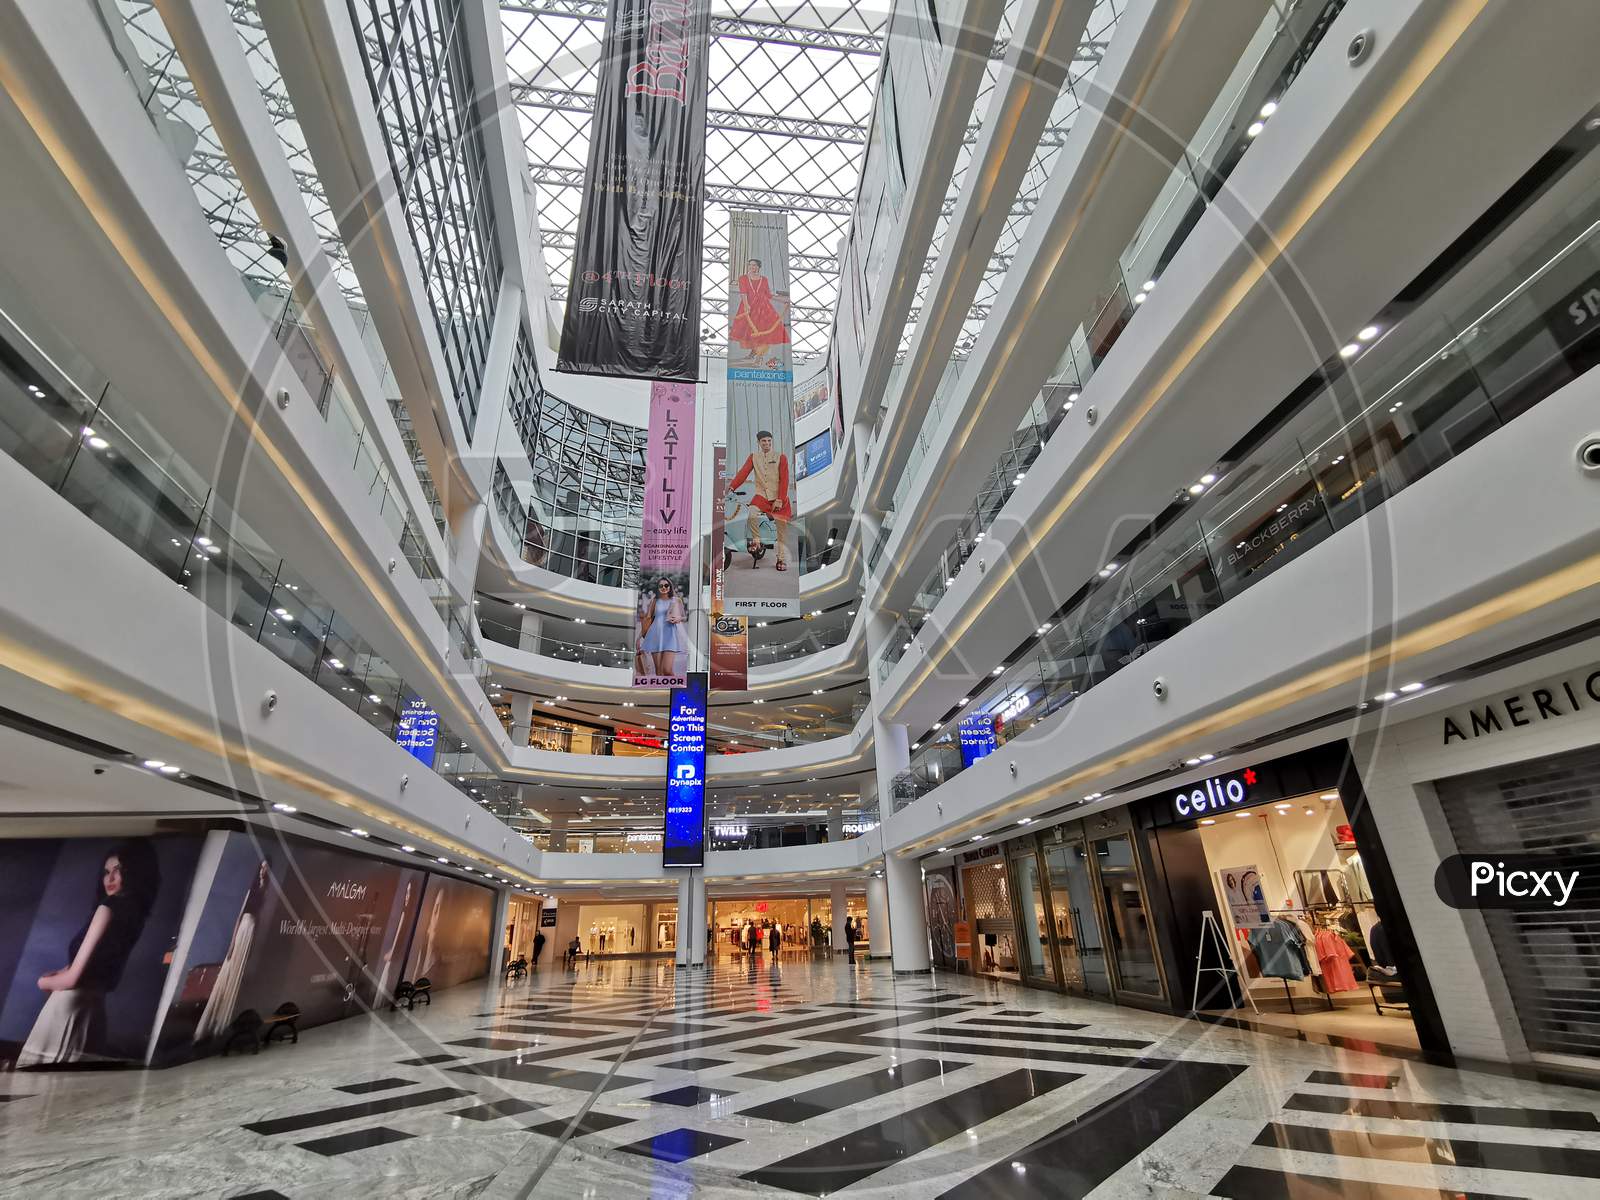 Inside Views of AMB Mall